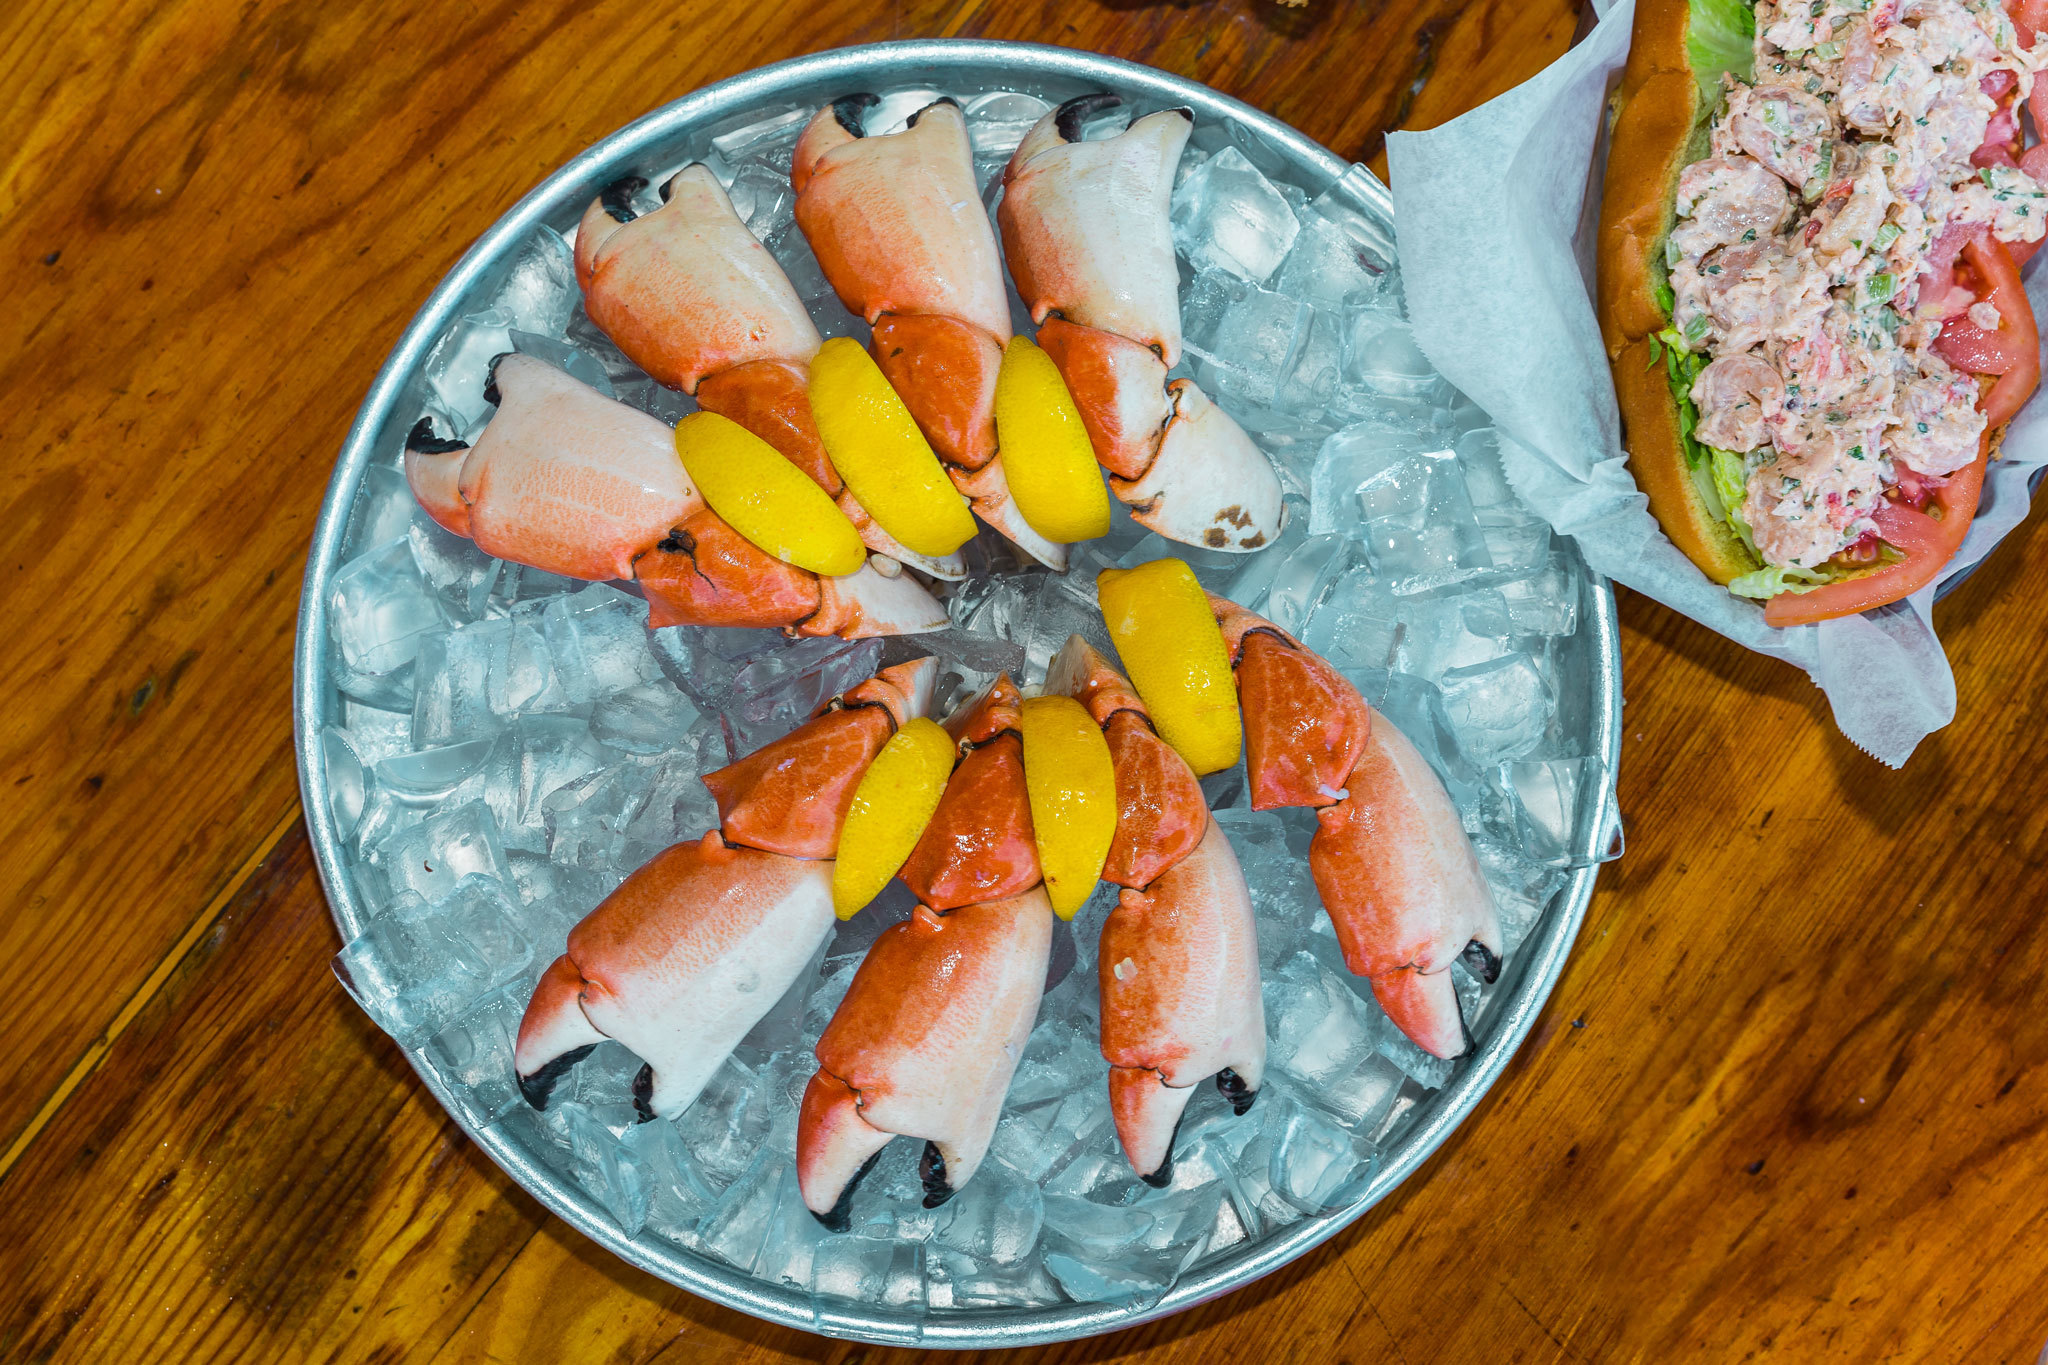 14 Best Restaurants for Stone Crabs in Miami - 2020/21 Season